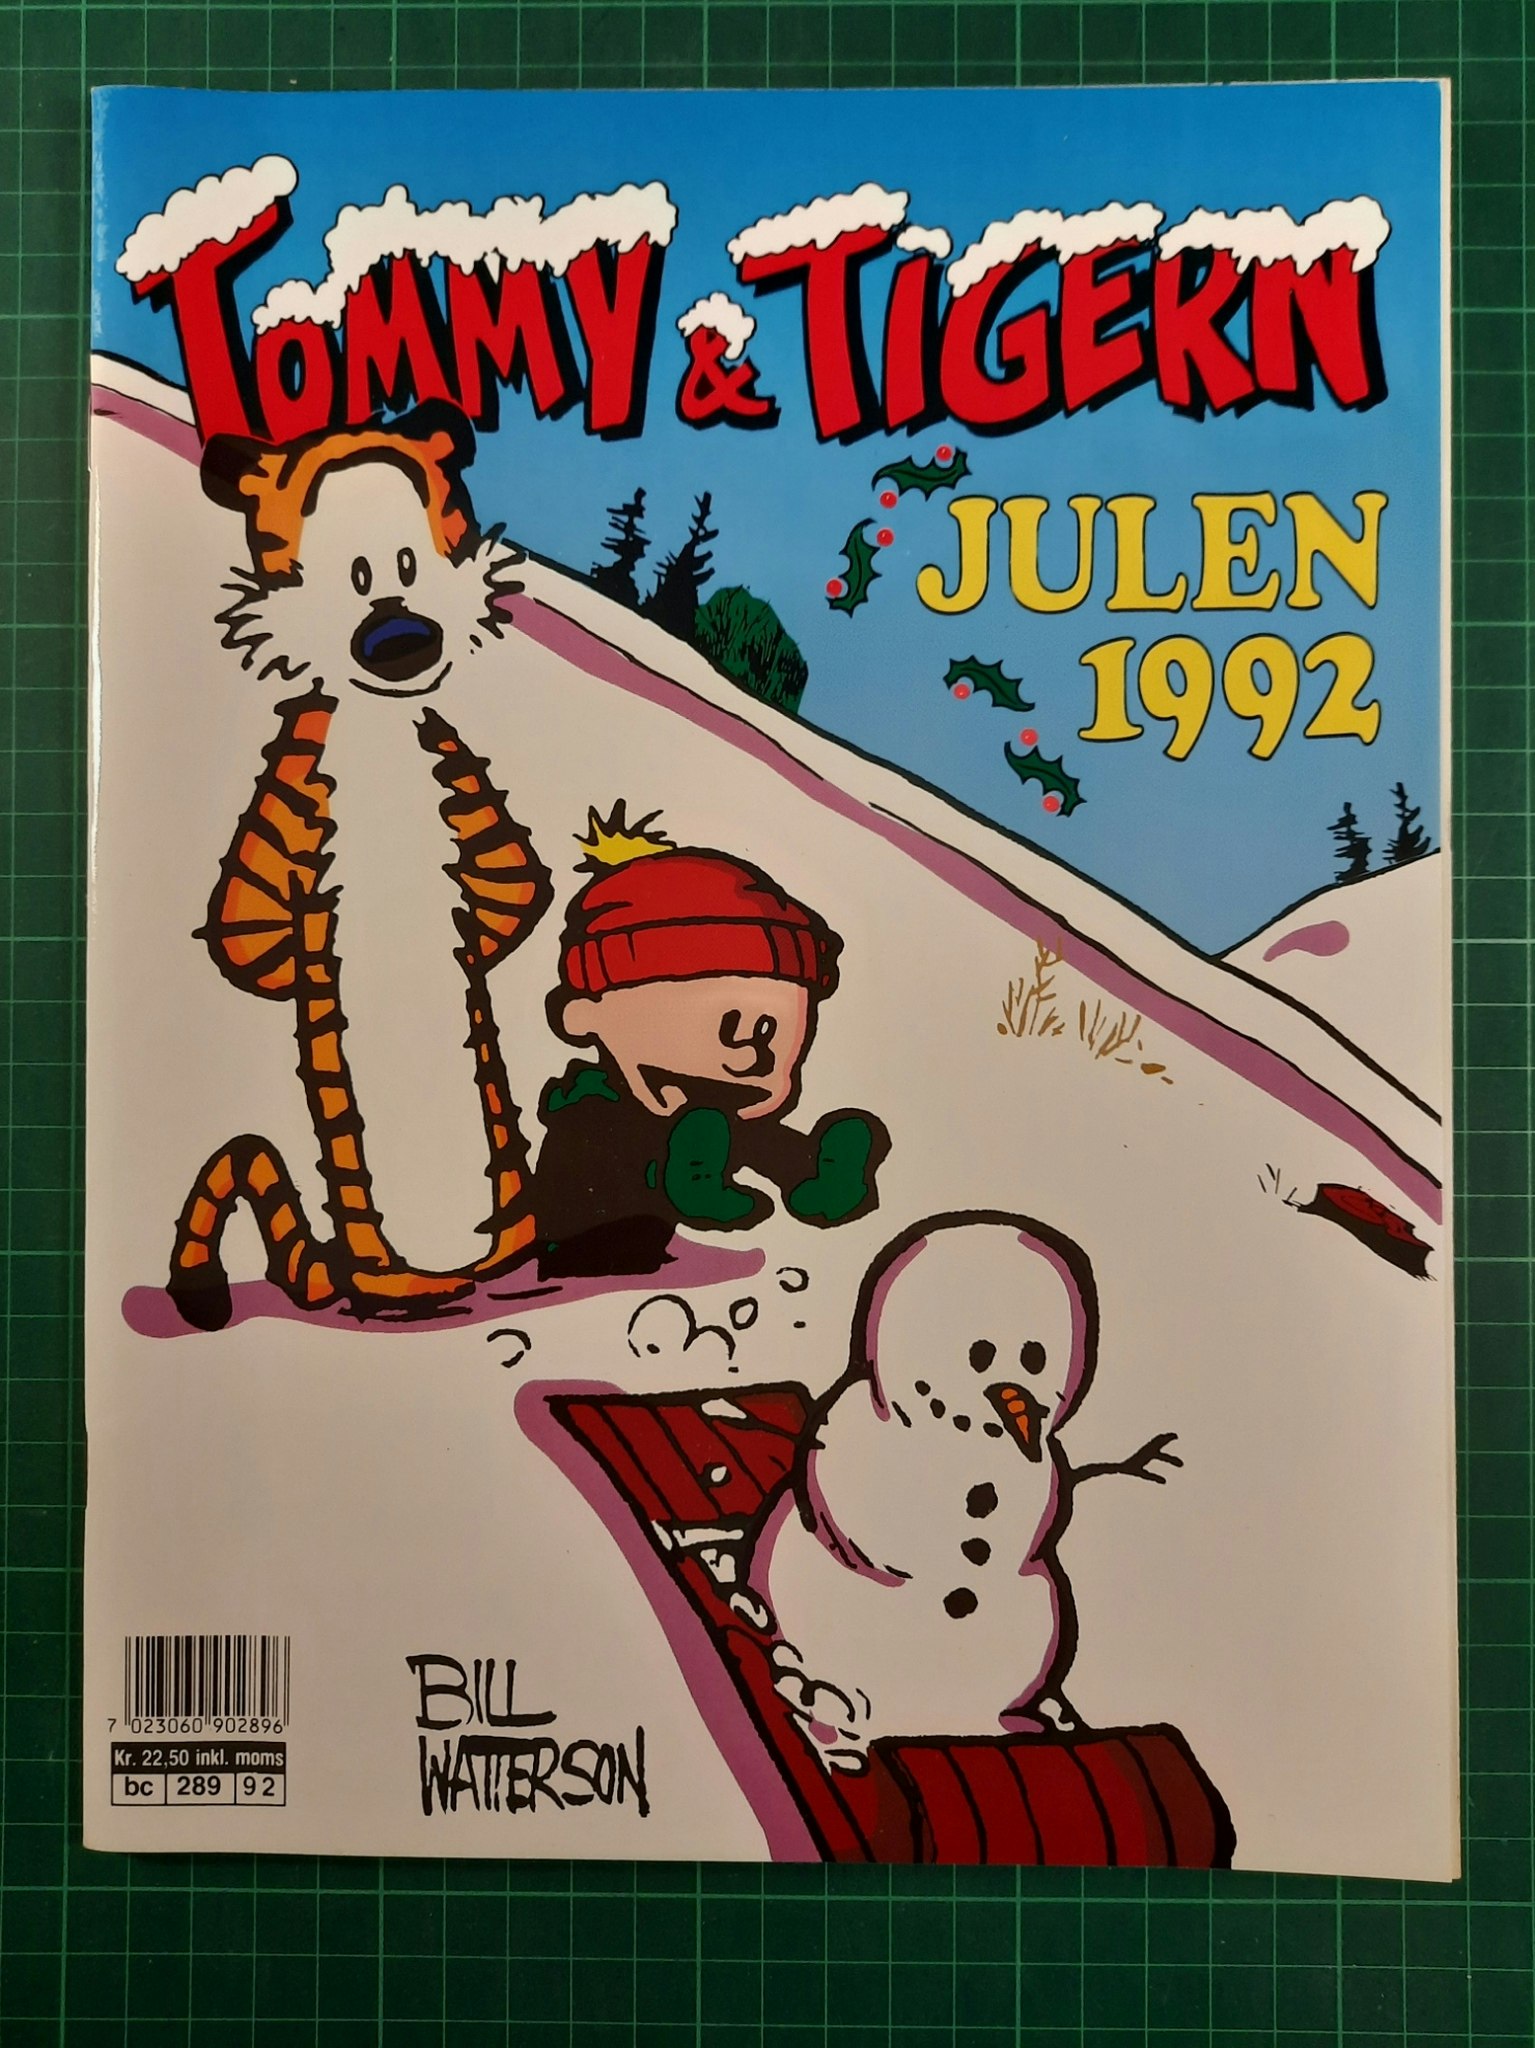 Tommy & Tigern julen 1992